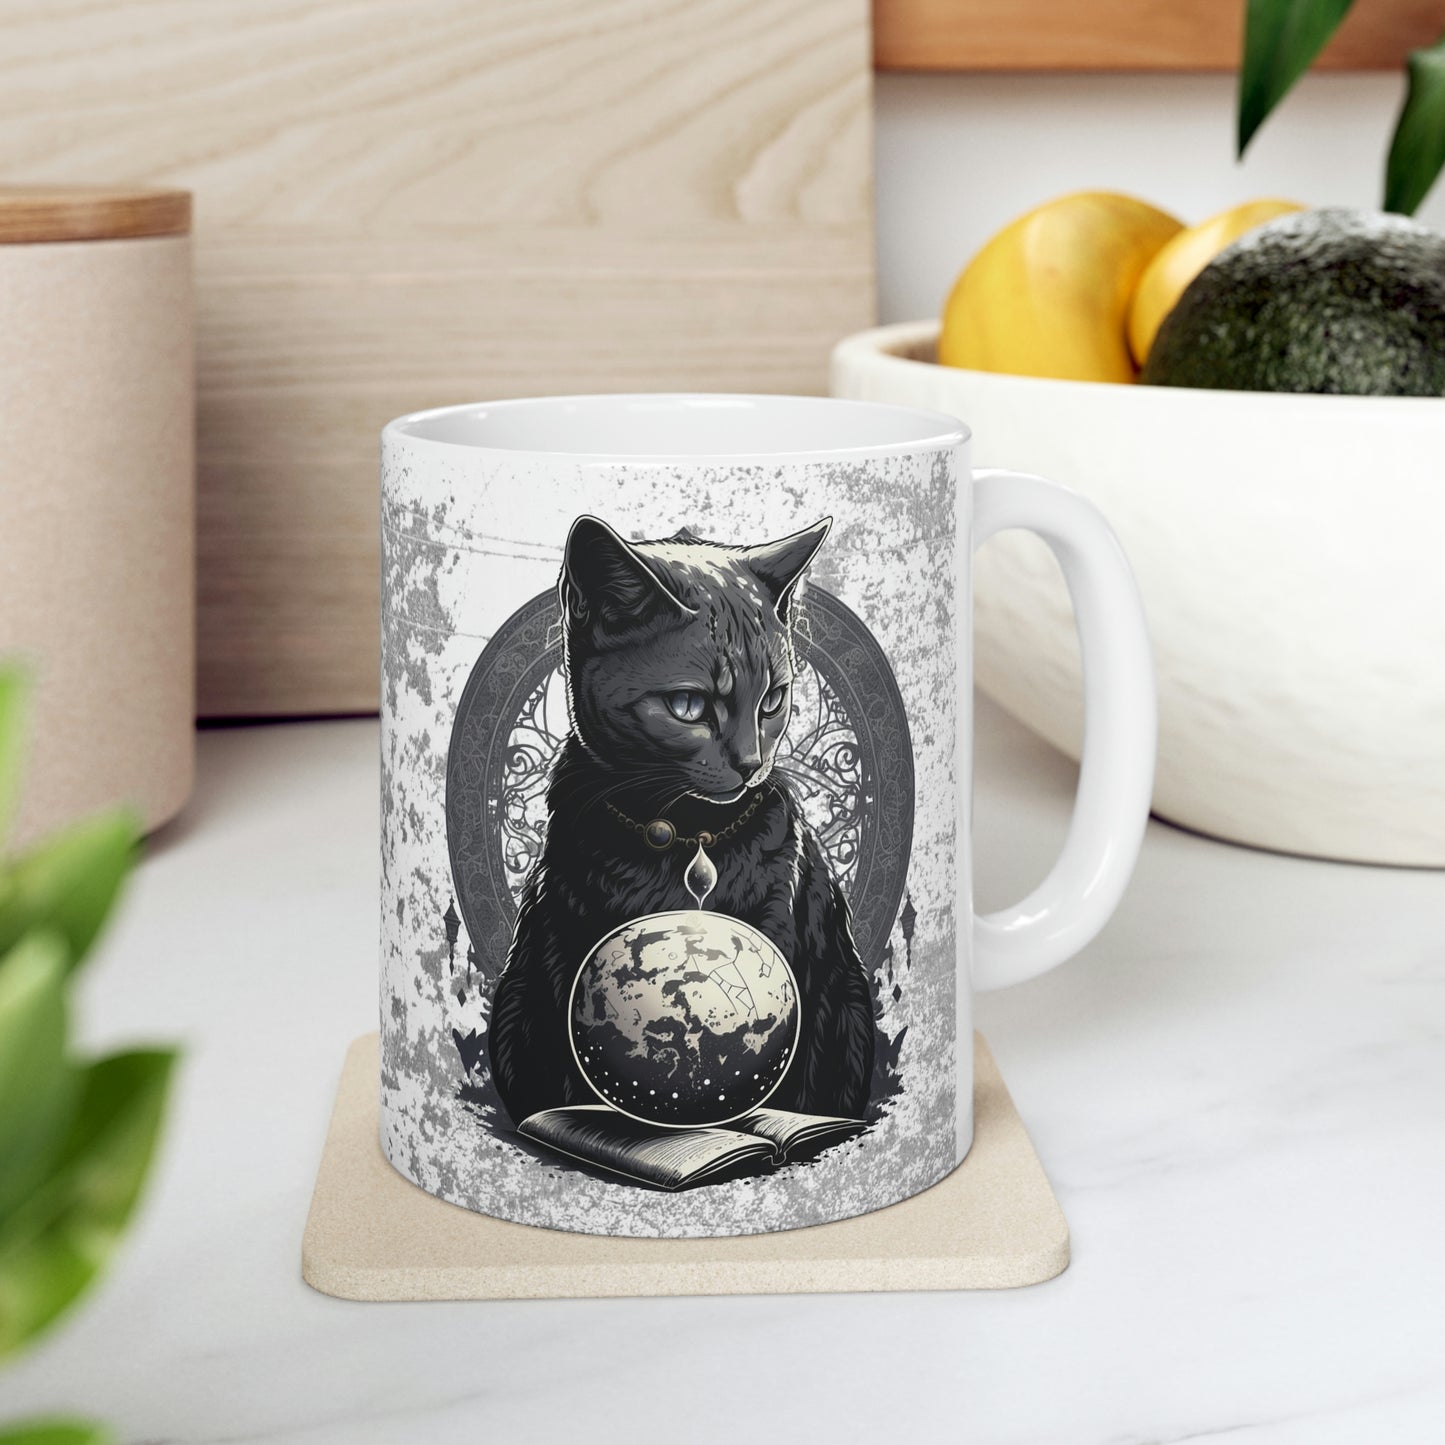 Cosmic Cat Ceramic Mug 11oz, cat magician coffee mug, witchy gothic cat tea cup, whimsical mug, witchcraft celestial cat mug, fantasy mug